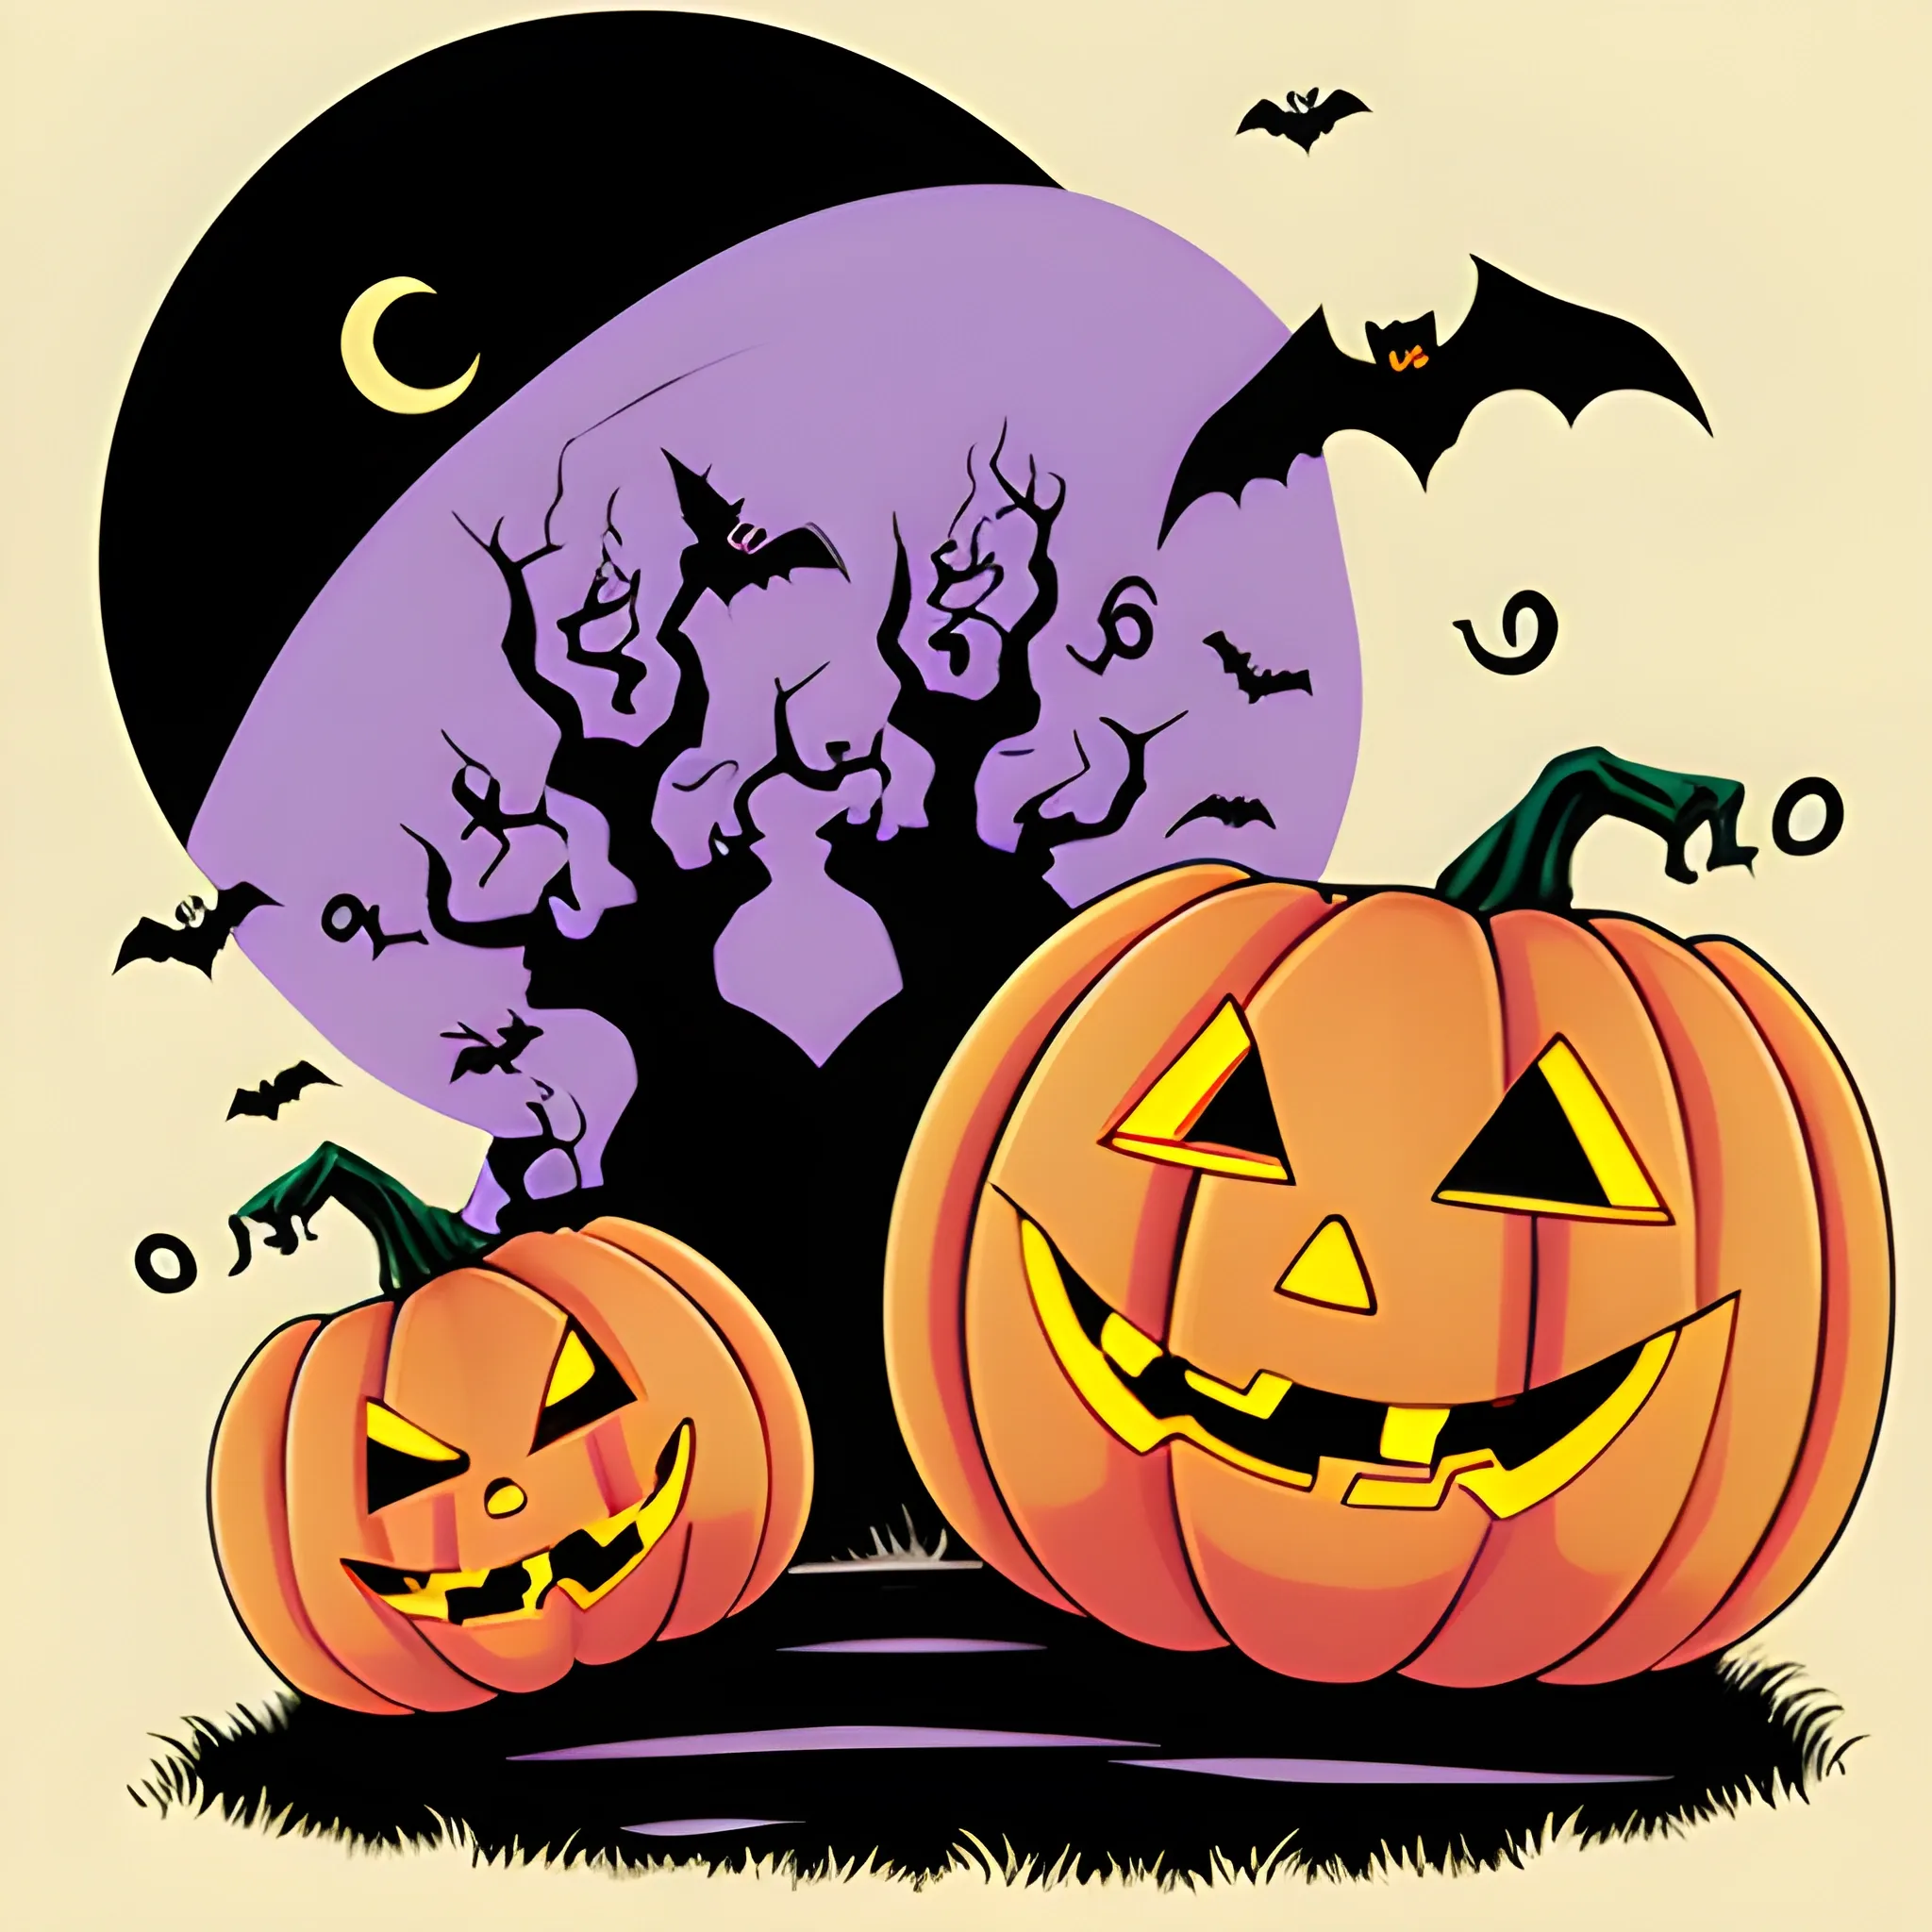 Halloween, Ghost, Cartoon, no text